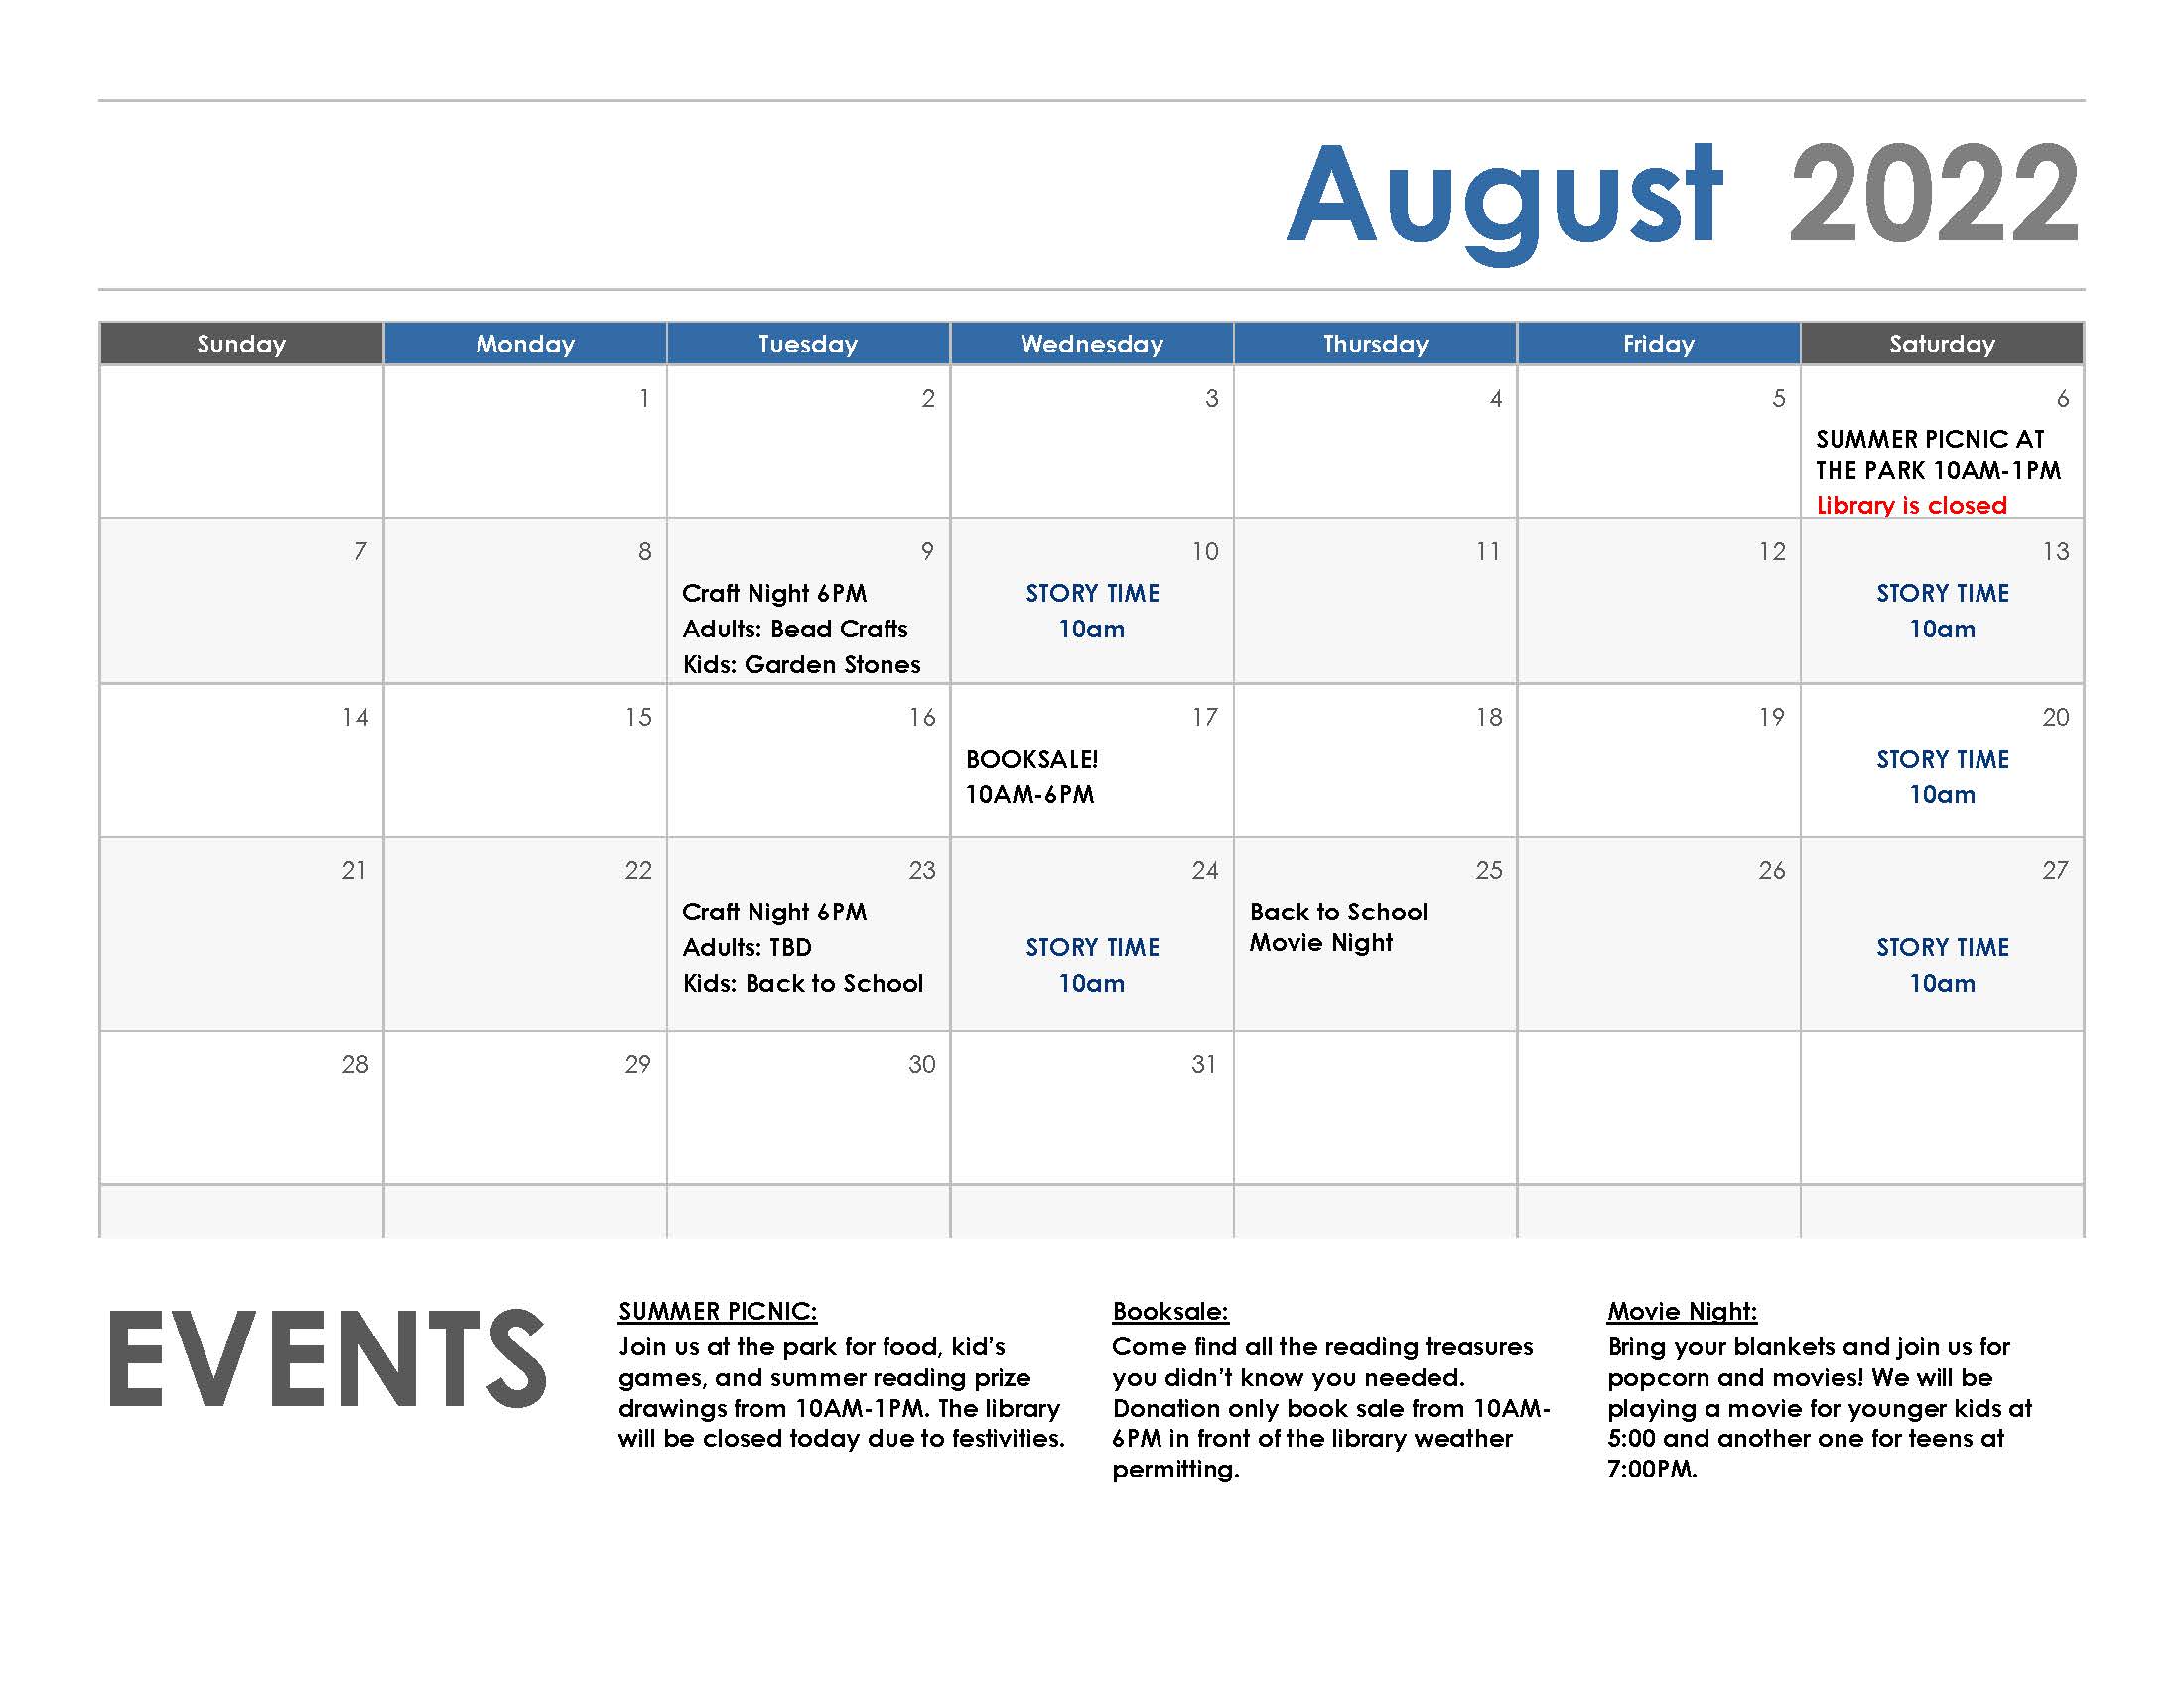 August Calendar Correct.jpg